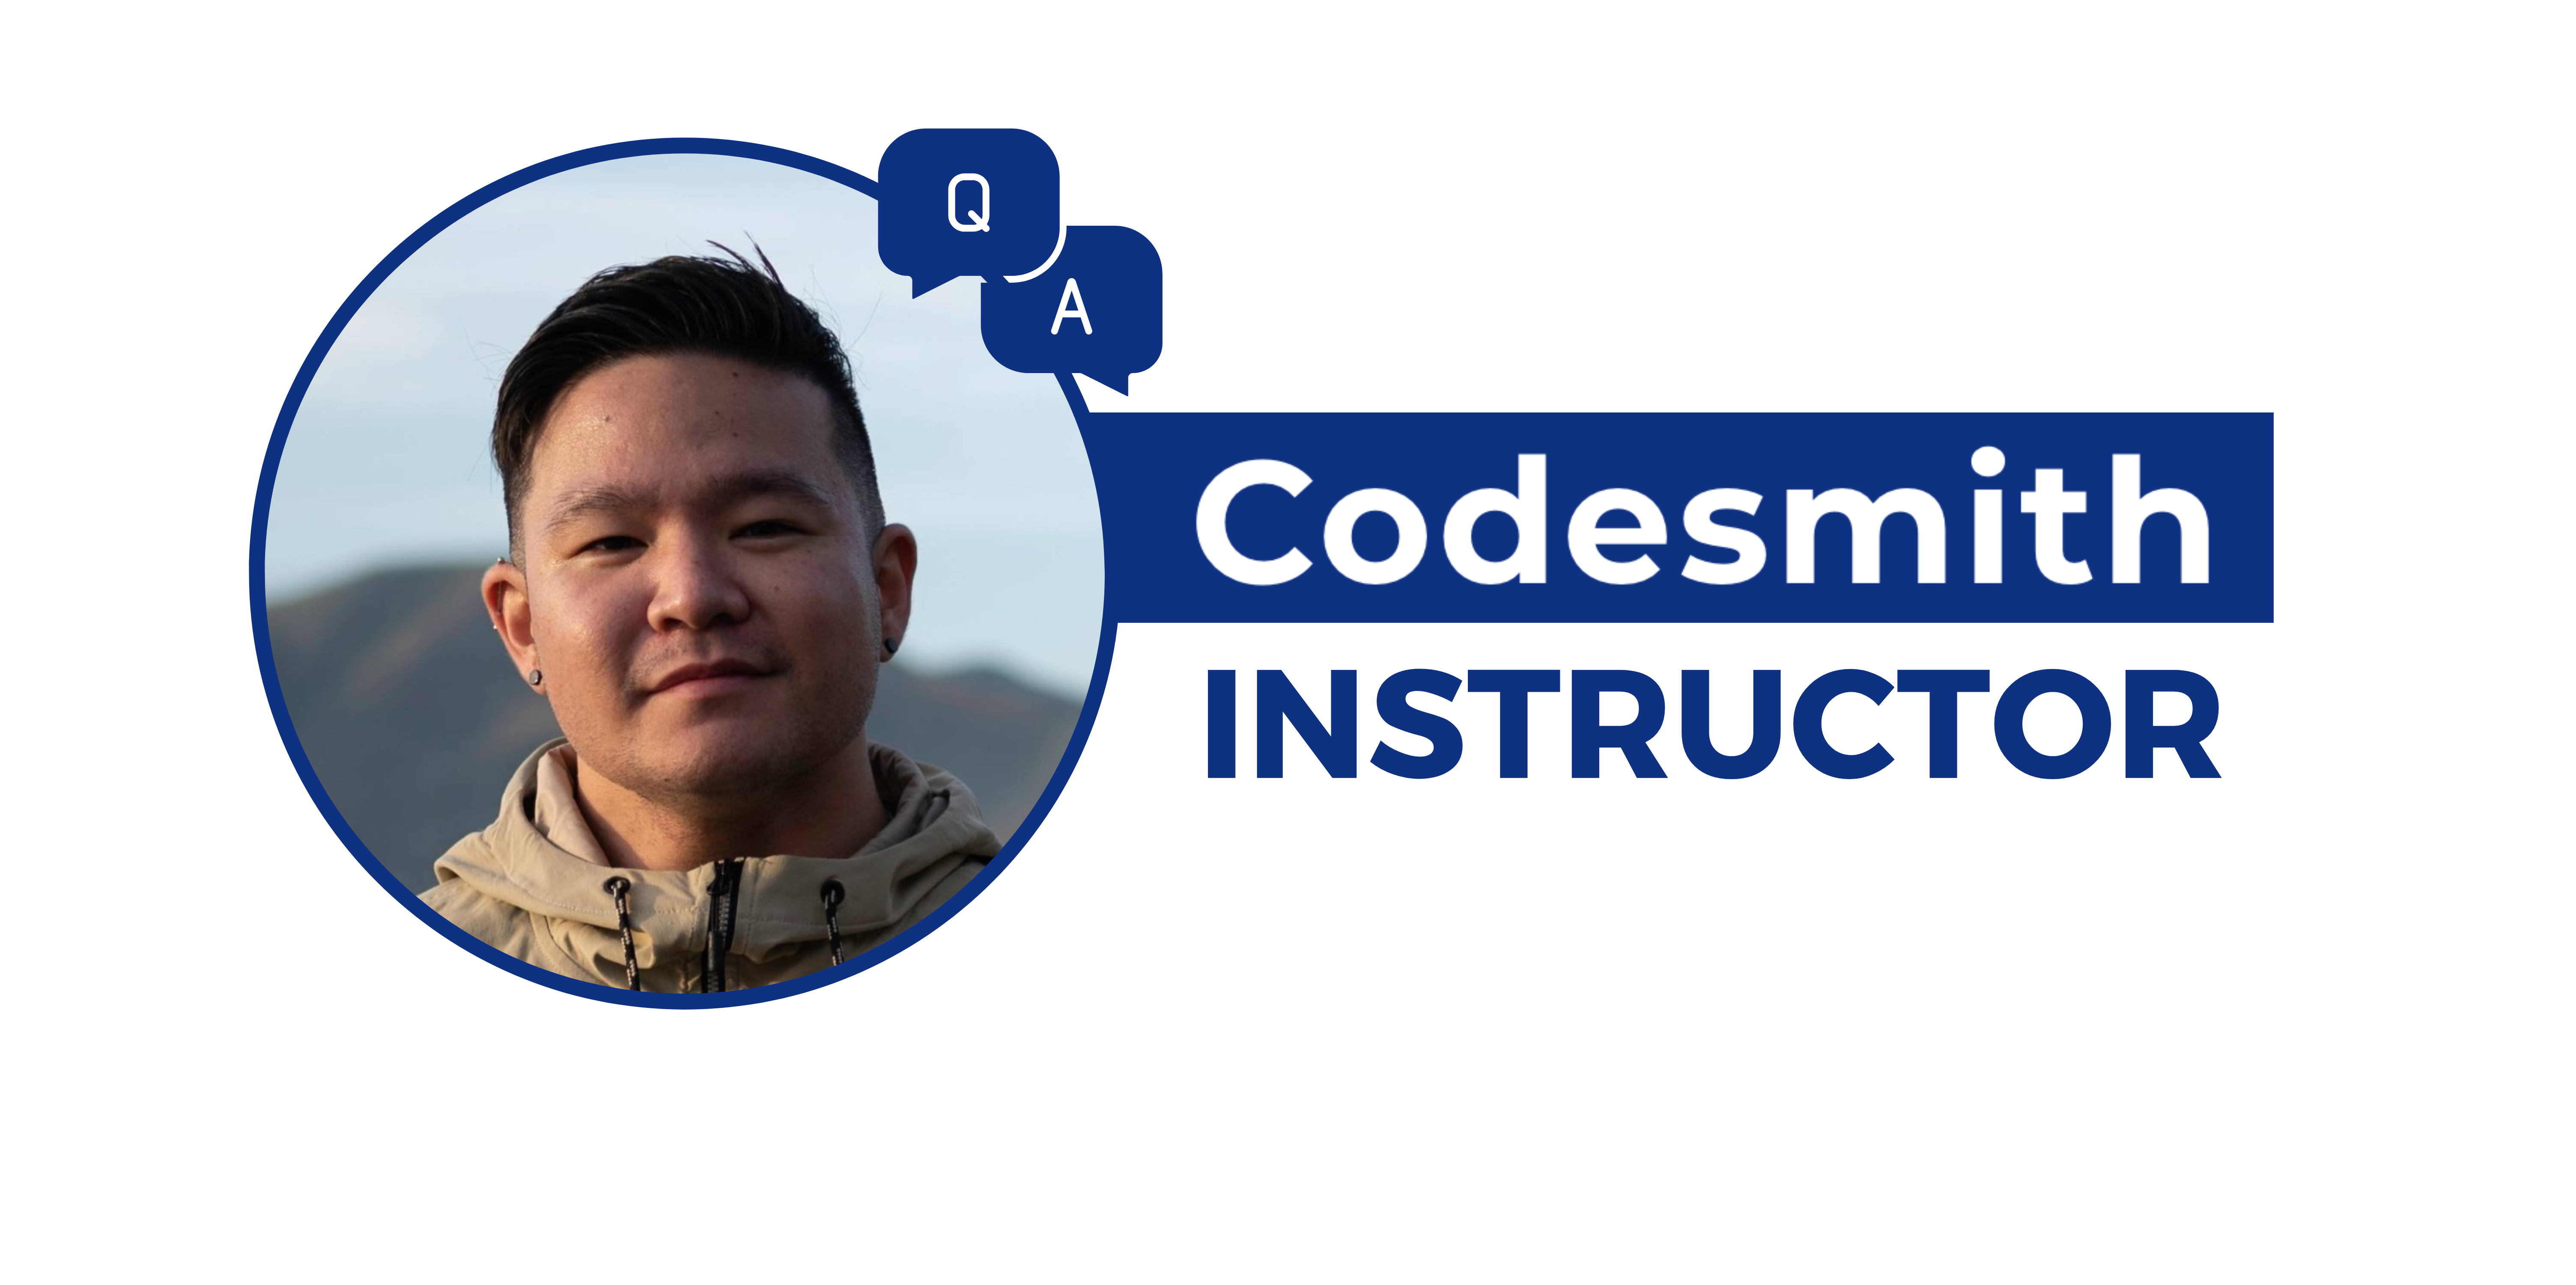 Image of Codesmith instructor Mike Masatsugu with text that reads Codesmith Instructor Q&A